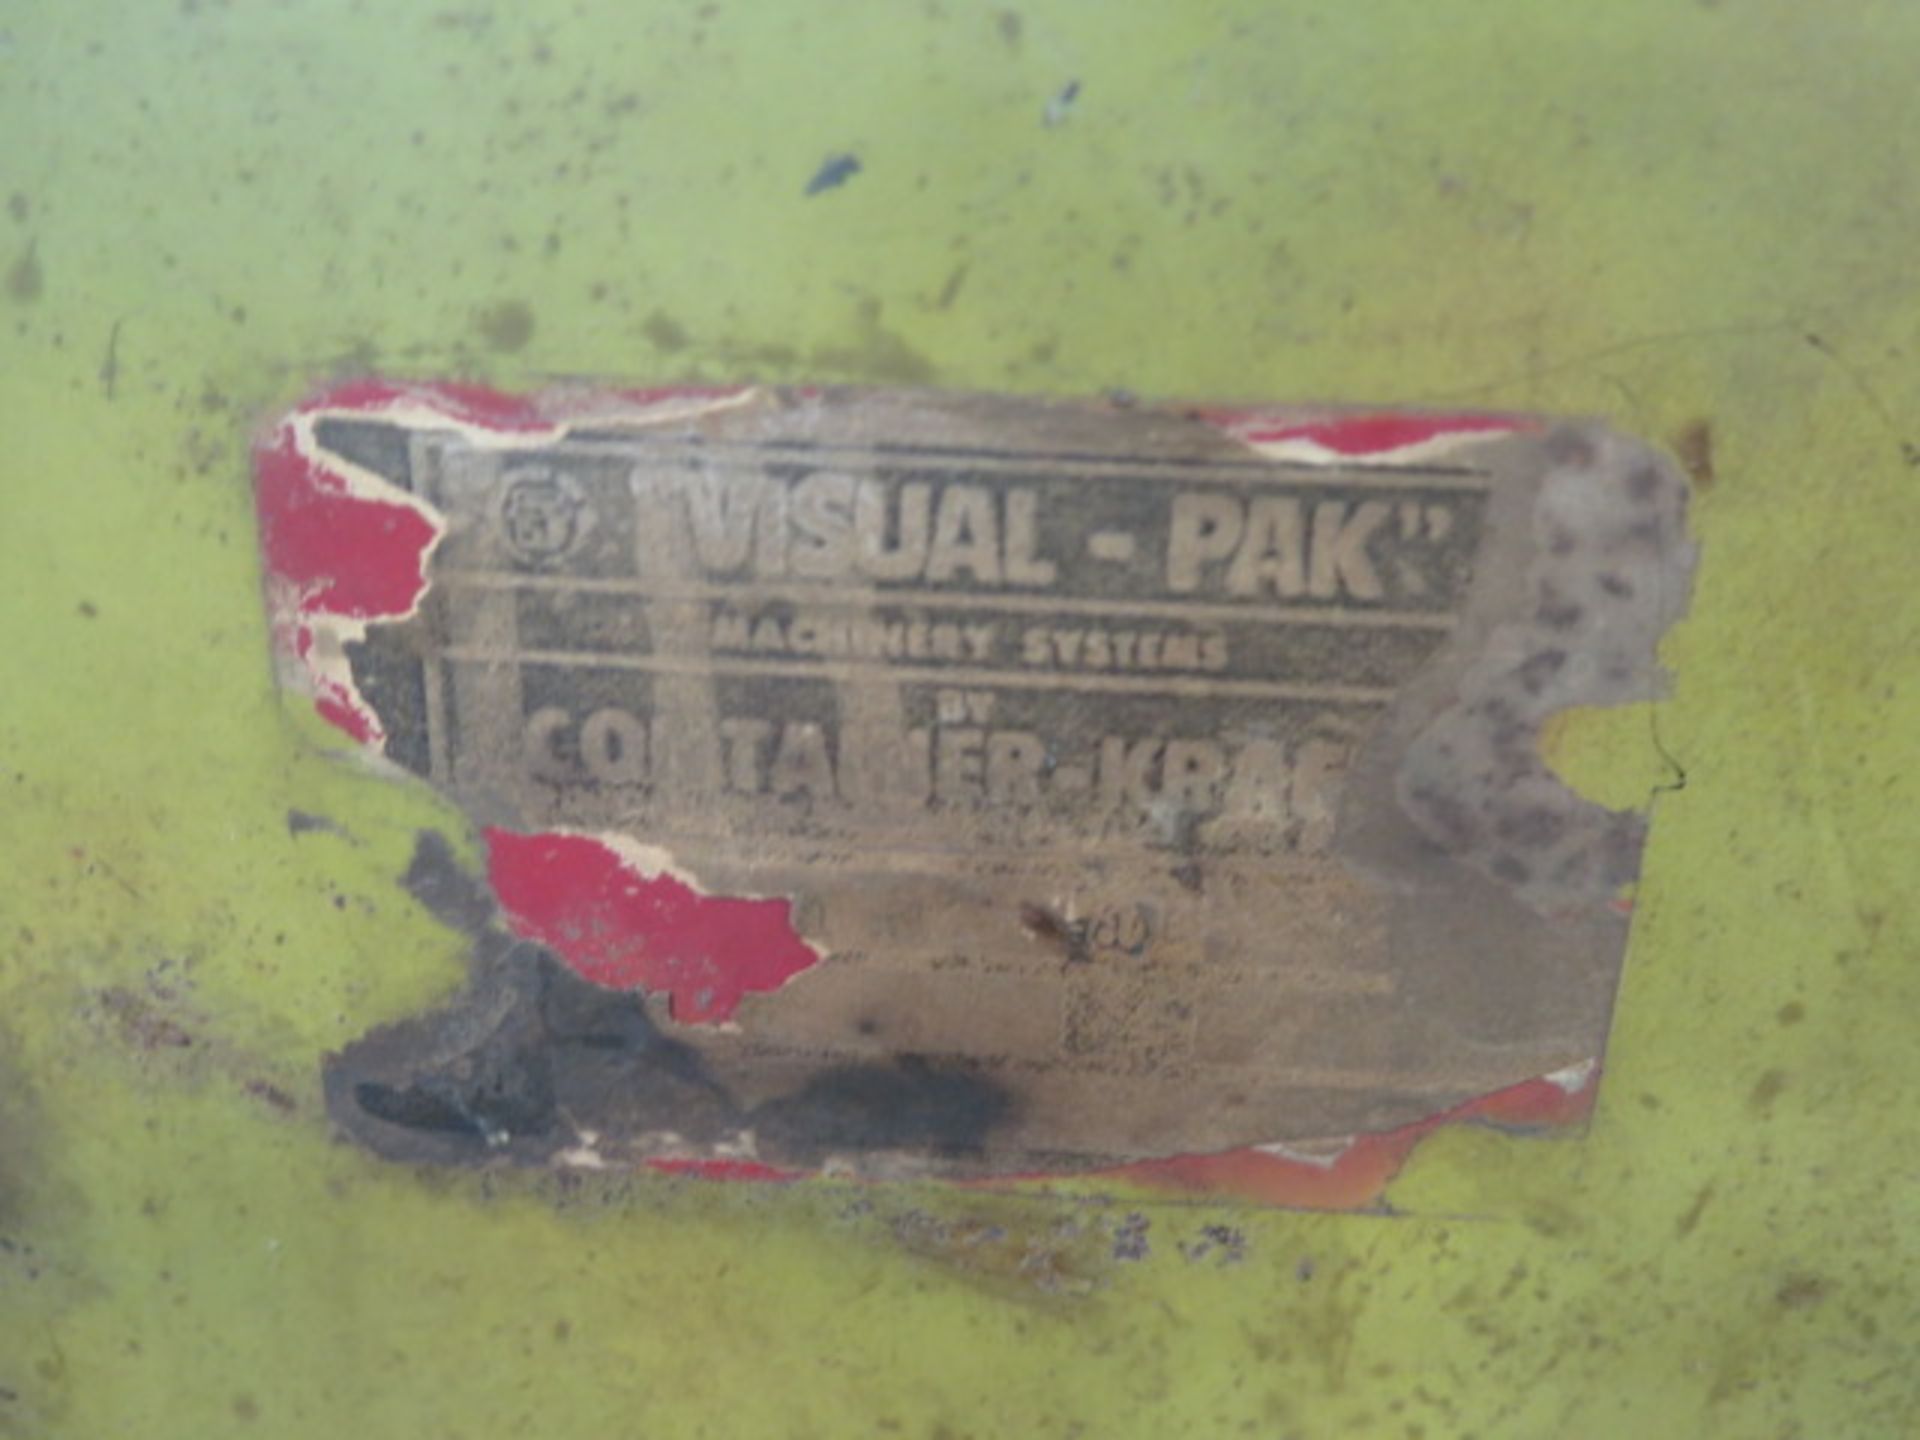 Visual-Pak Packaging Machine - Image 4 of 5